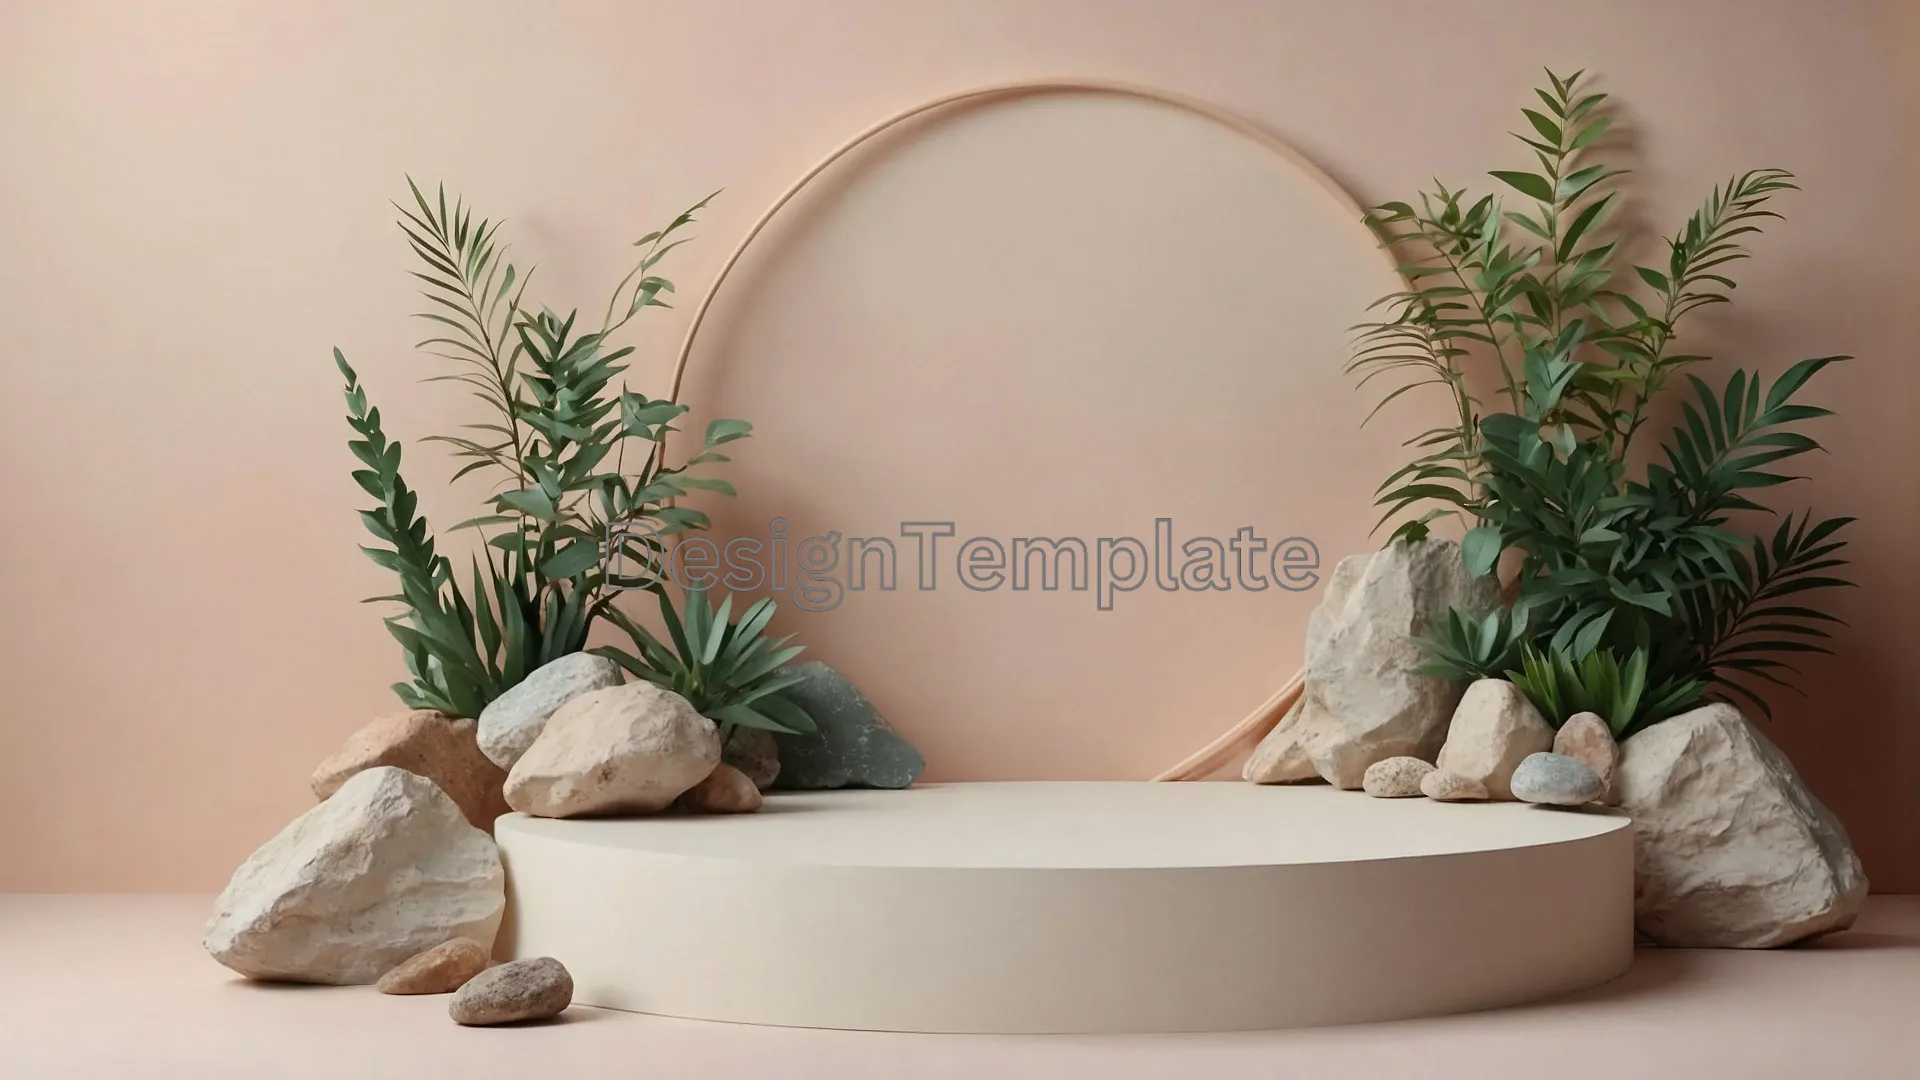 Calm Plant Frame Background Texture